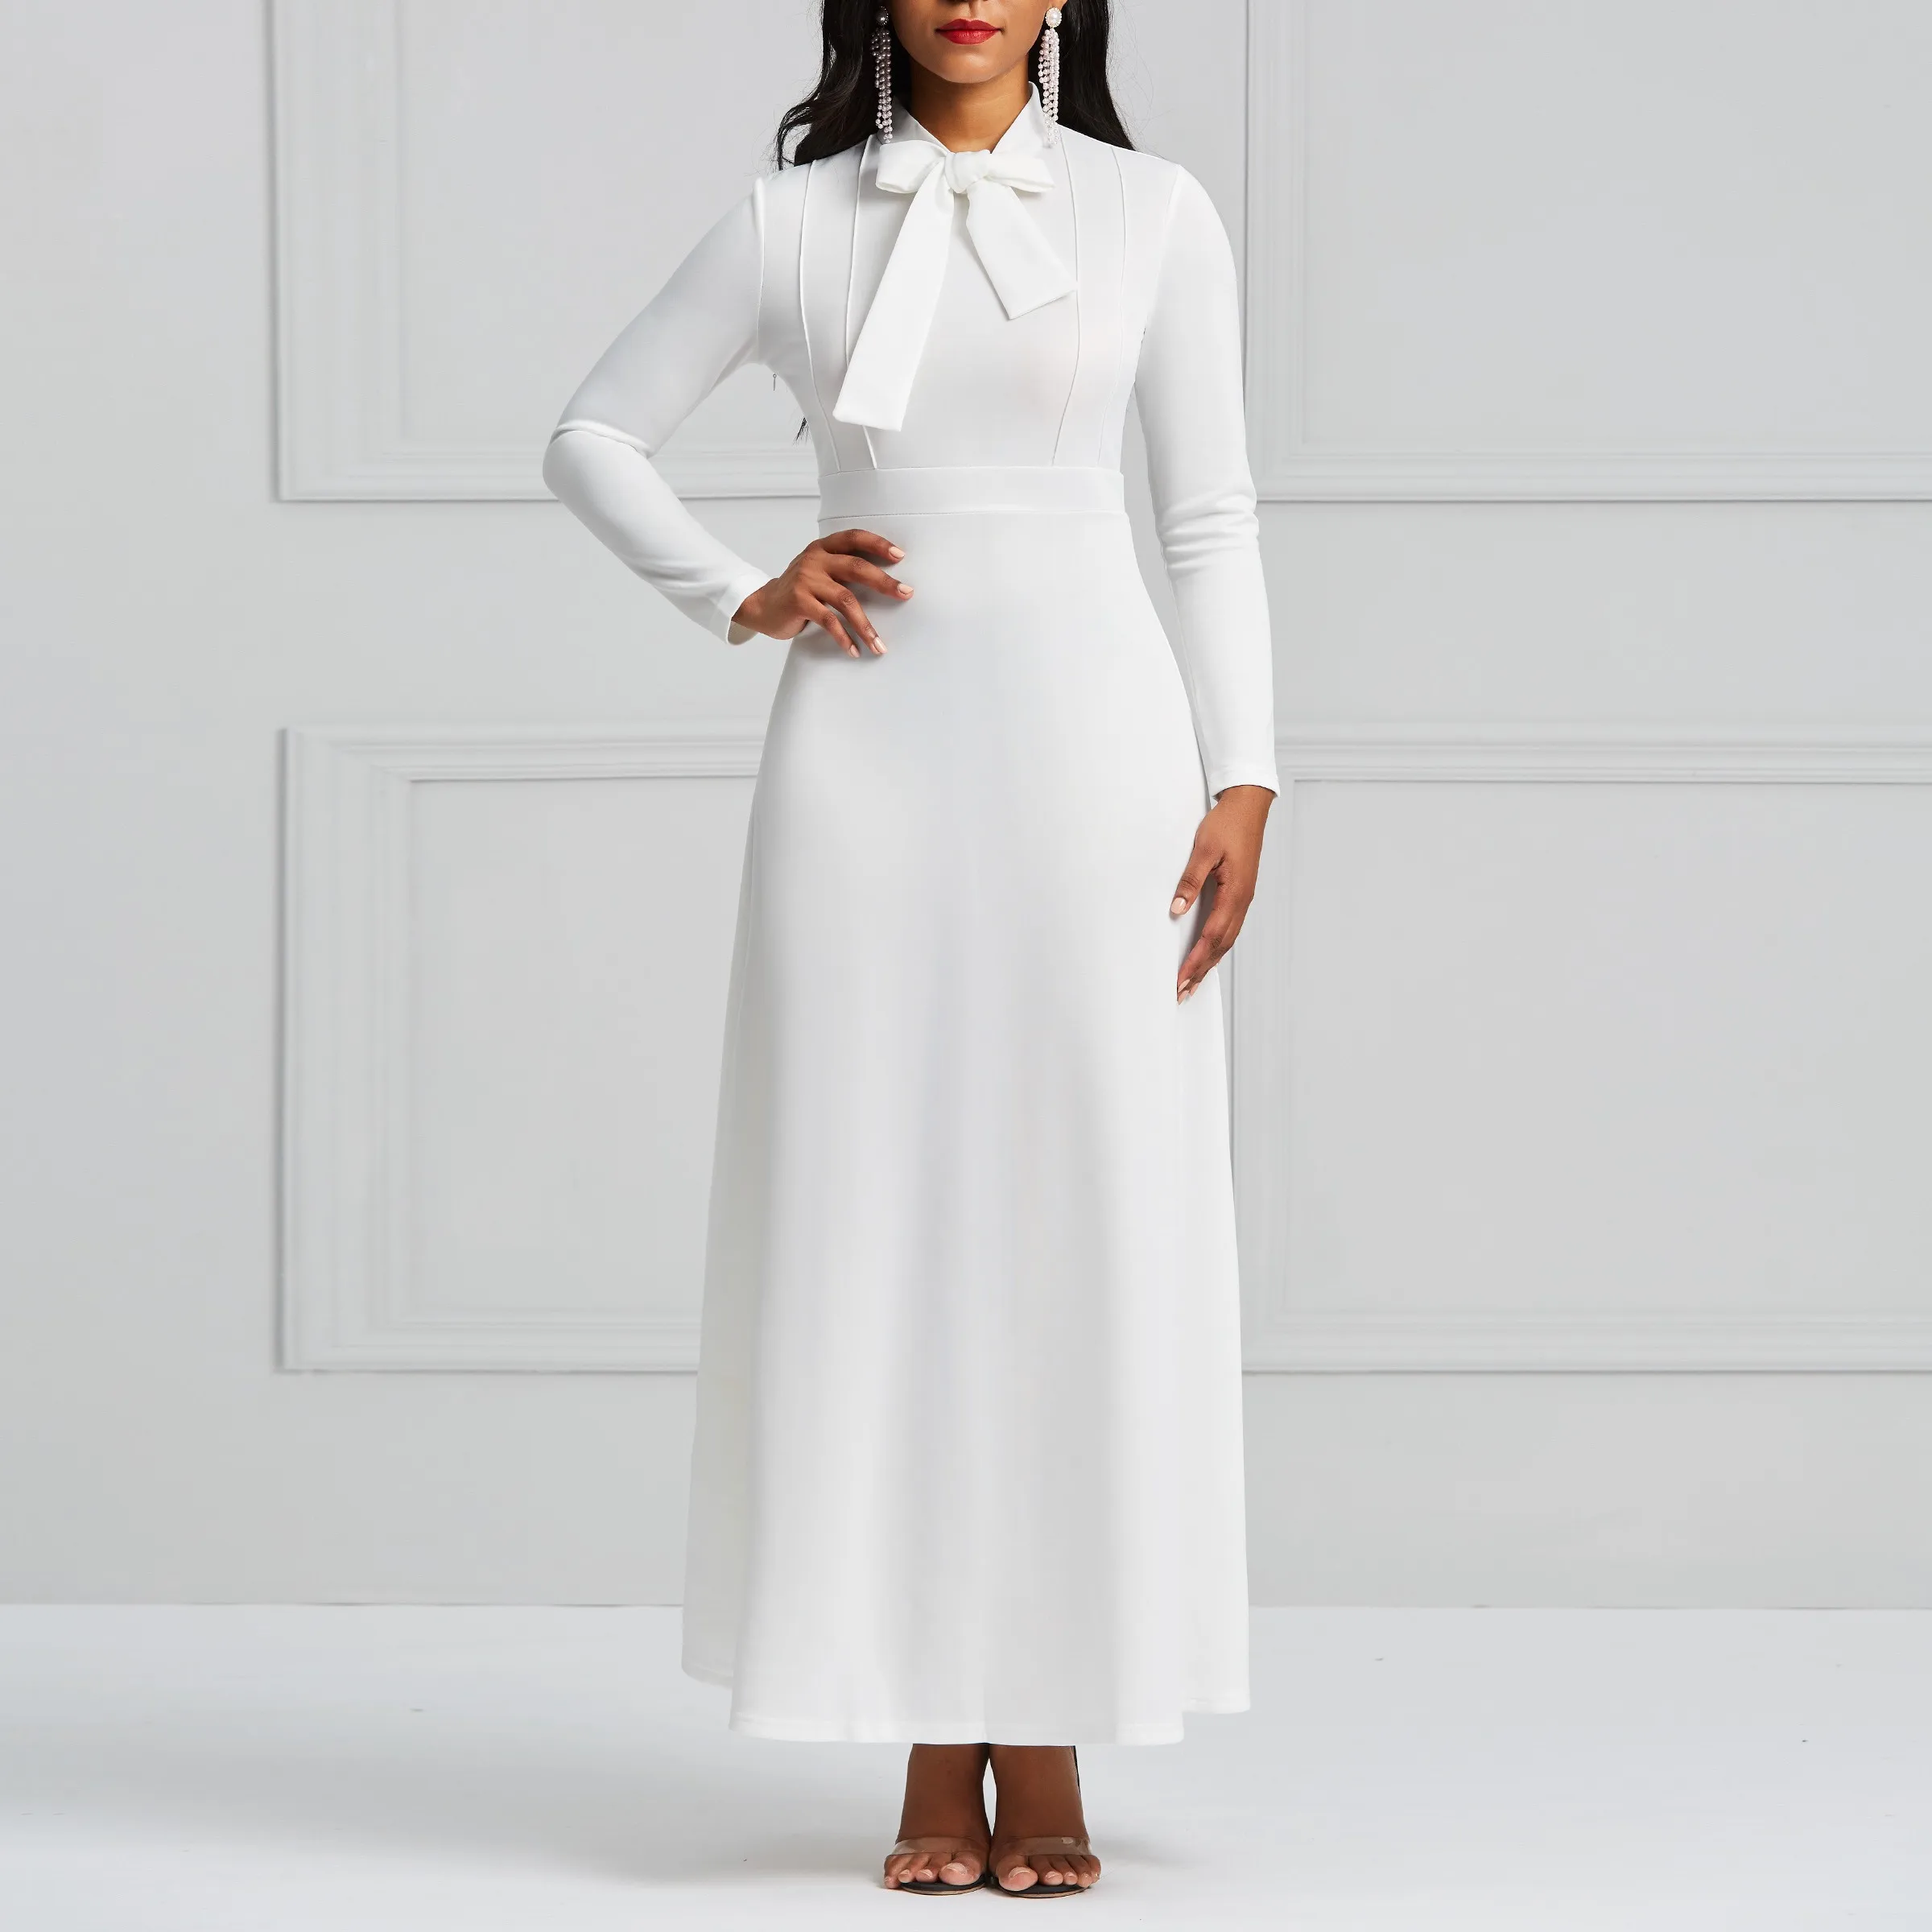 Clocolor White Long Dress Women Antumn Spring Long Sleeve Bowknot Plain